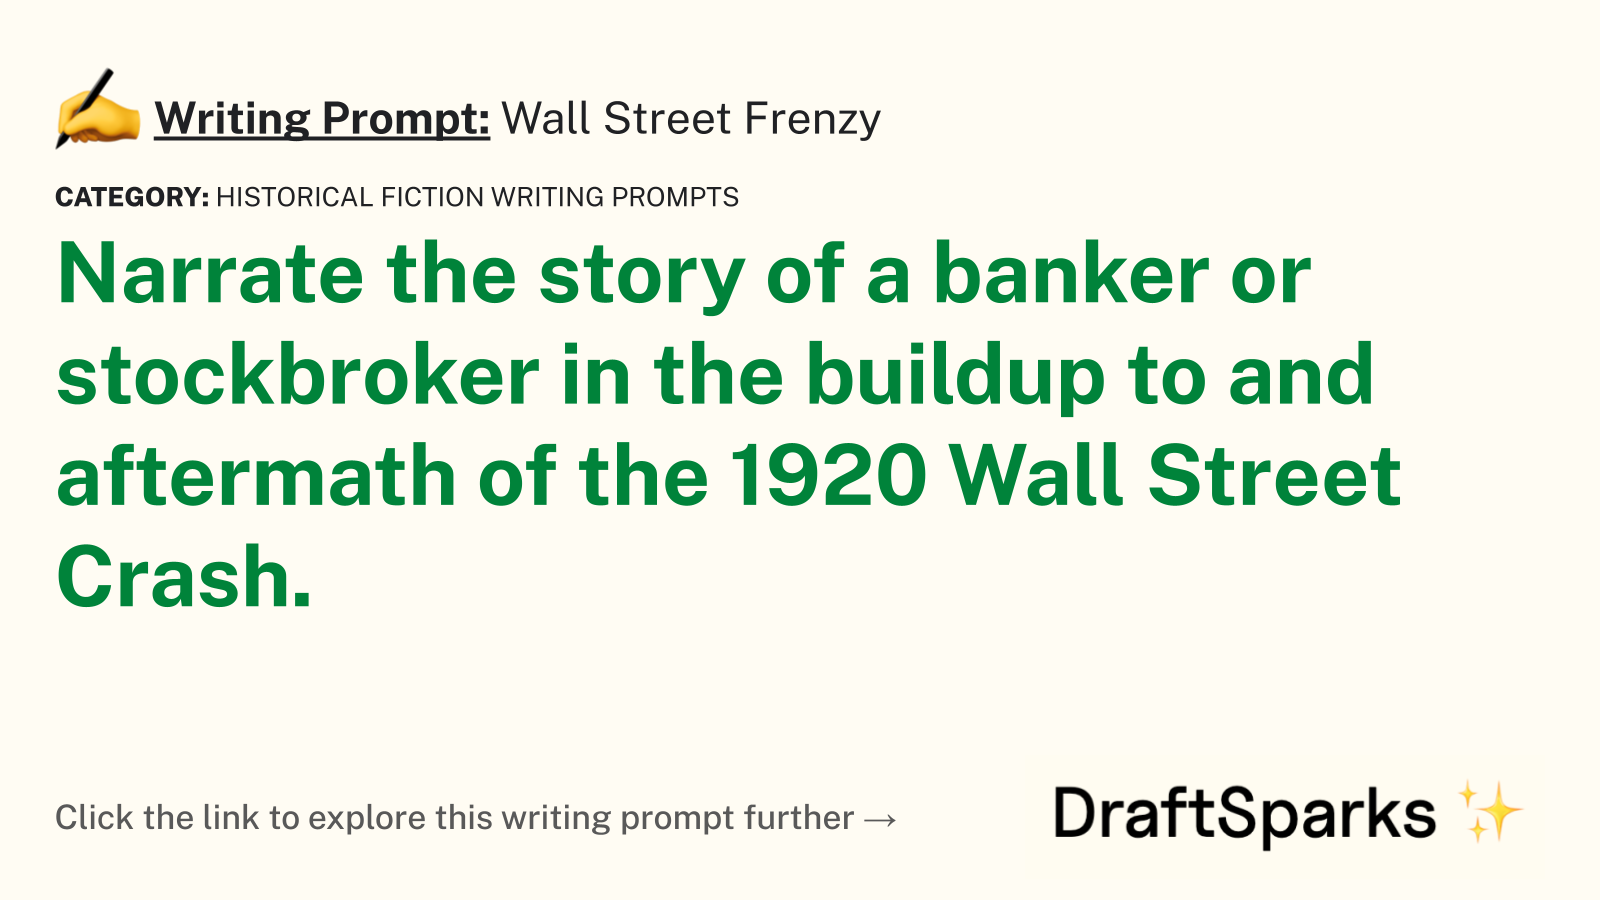 Wall Street Frenzy